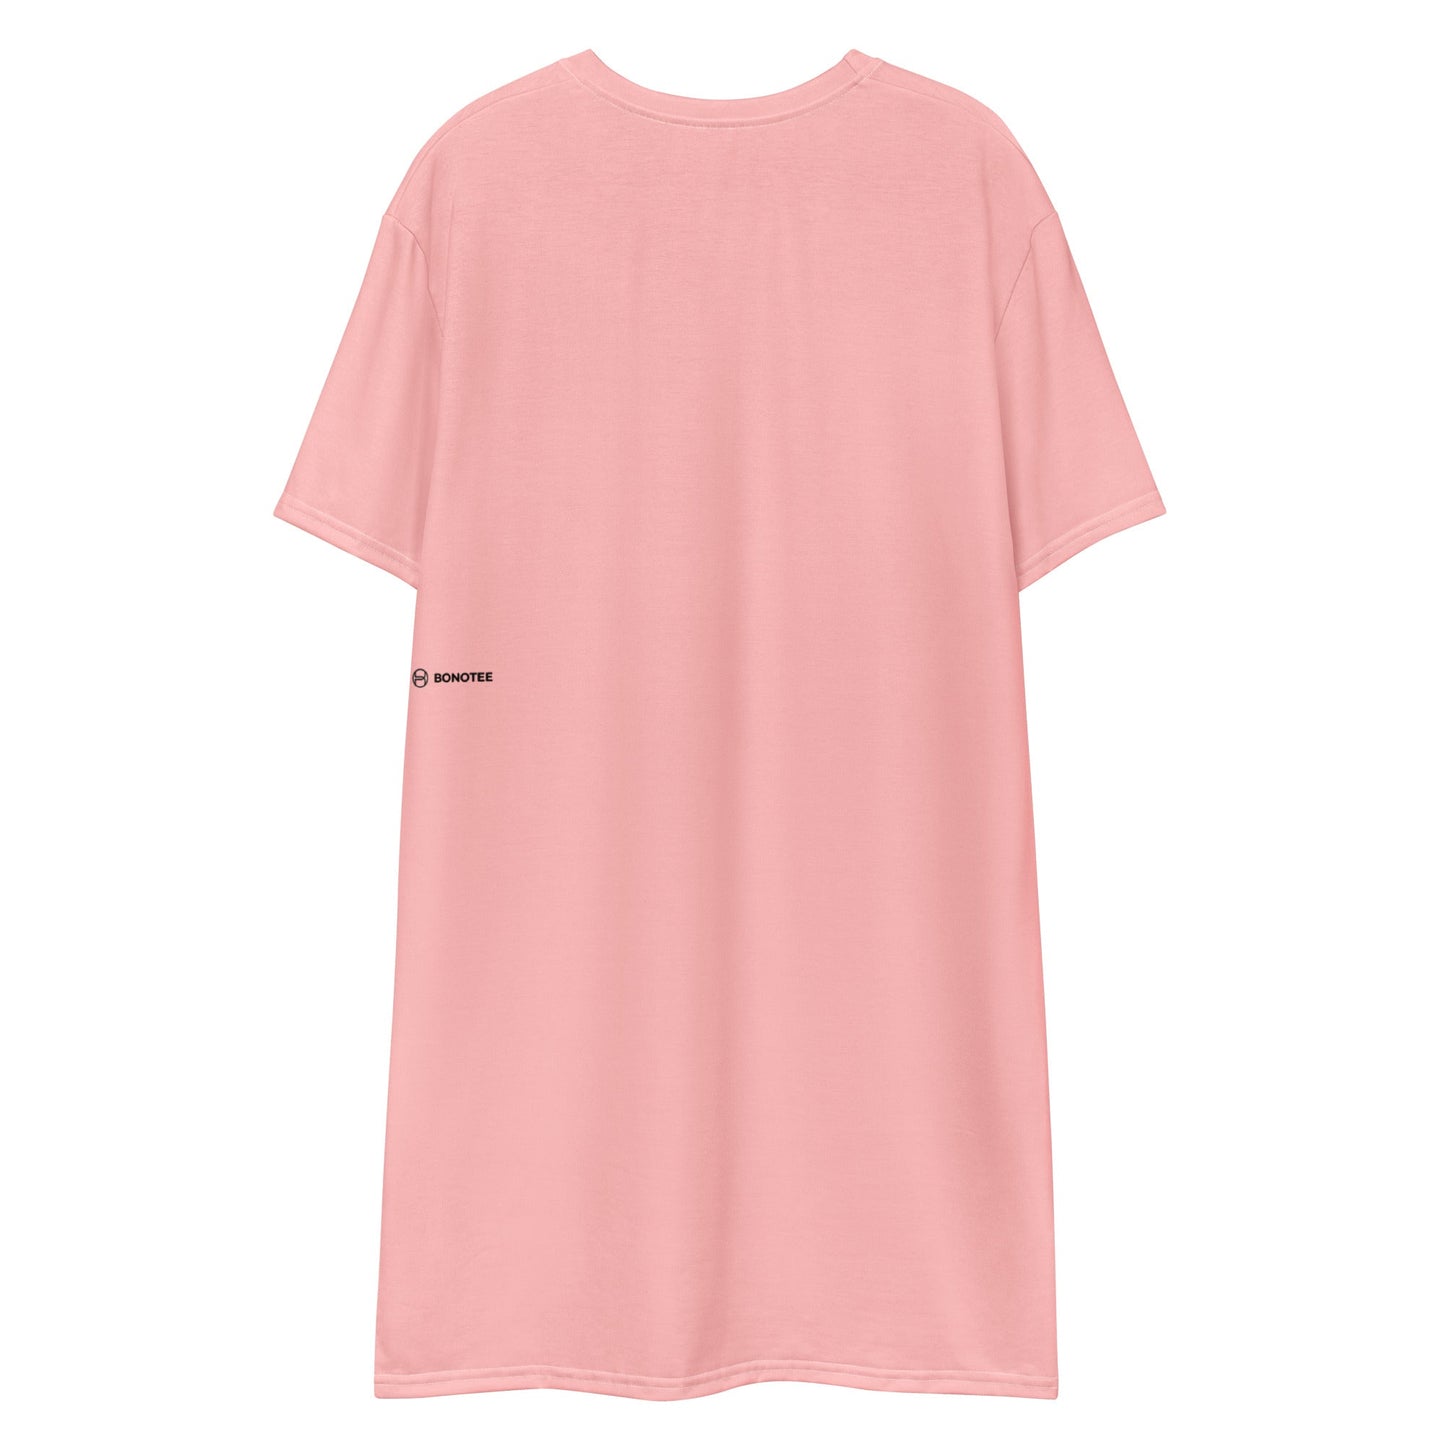 womens-tshirt-dress-tent-session-pink